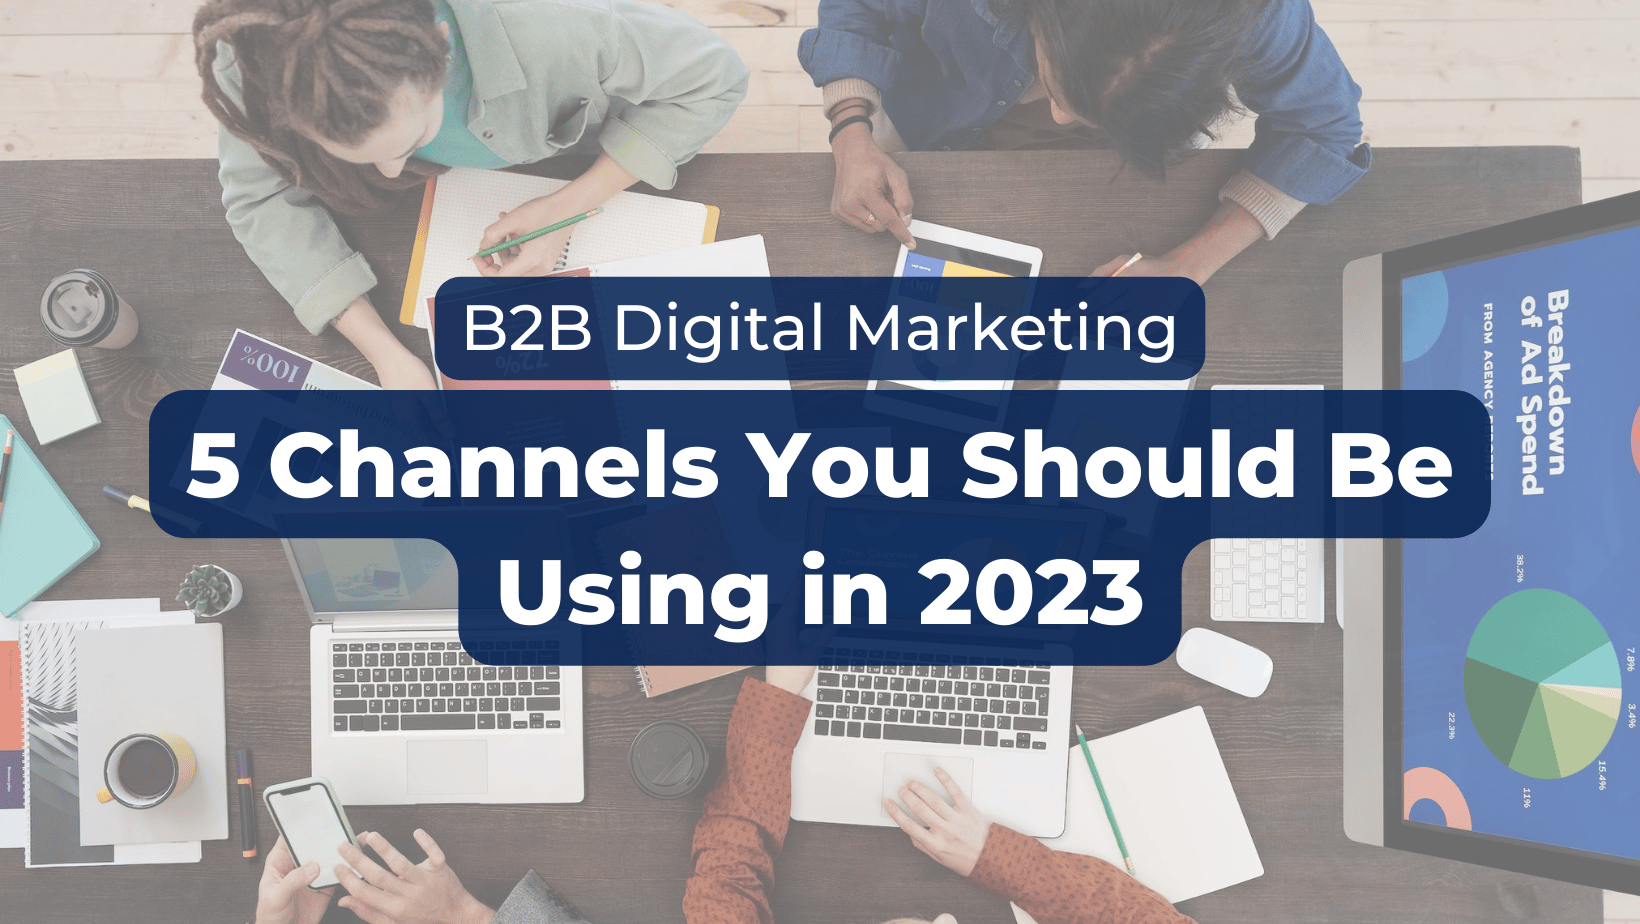 B2B Digital Marketing: 5 Channels You Should Be Using in 2023